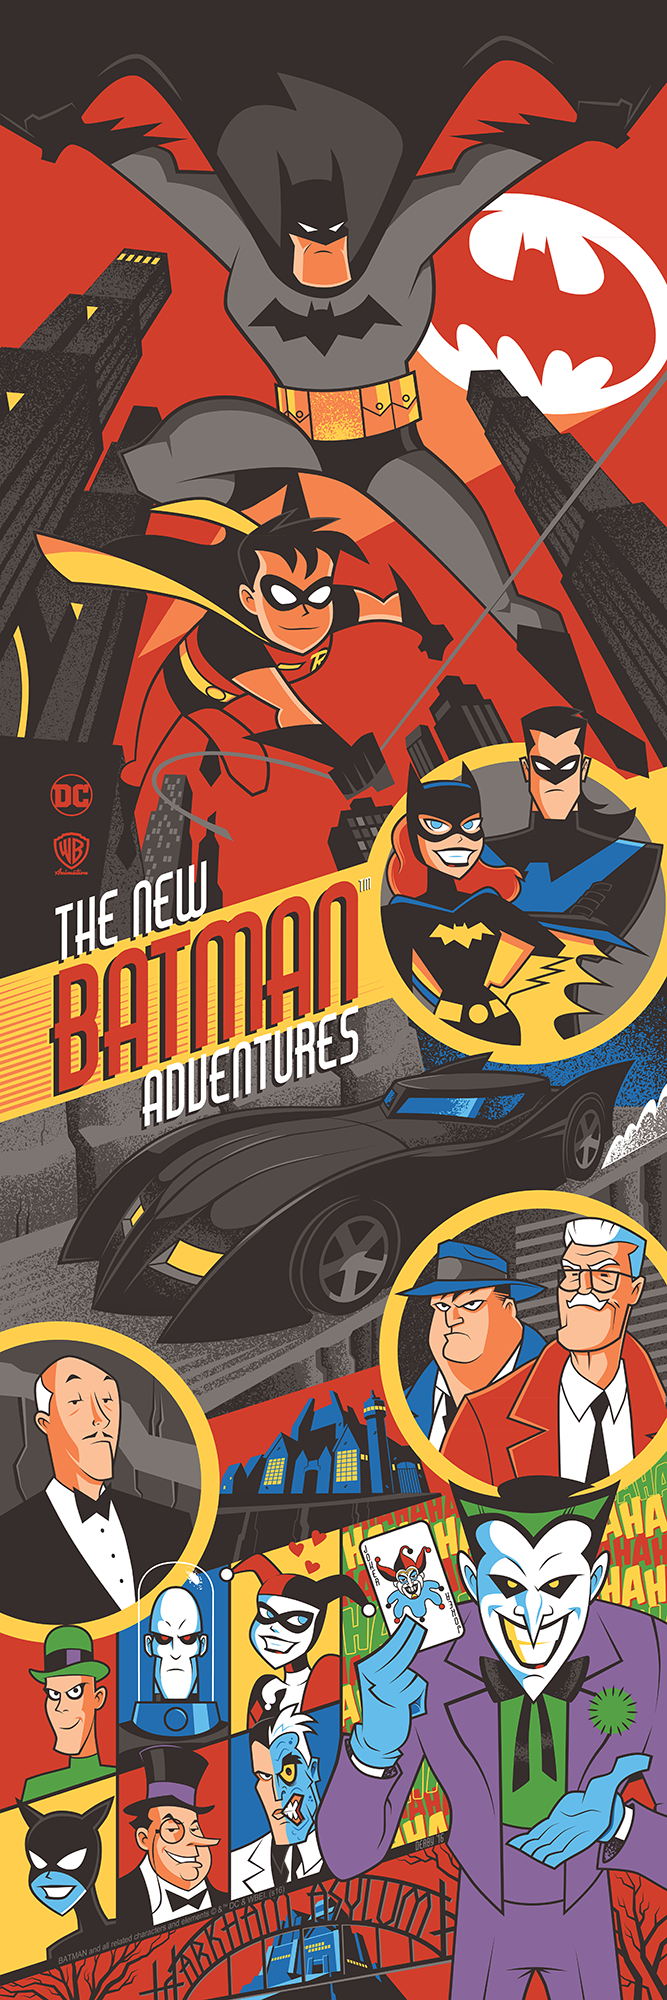 Scott Derby "The New Batman Adventures"